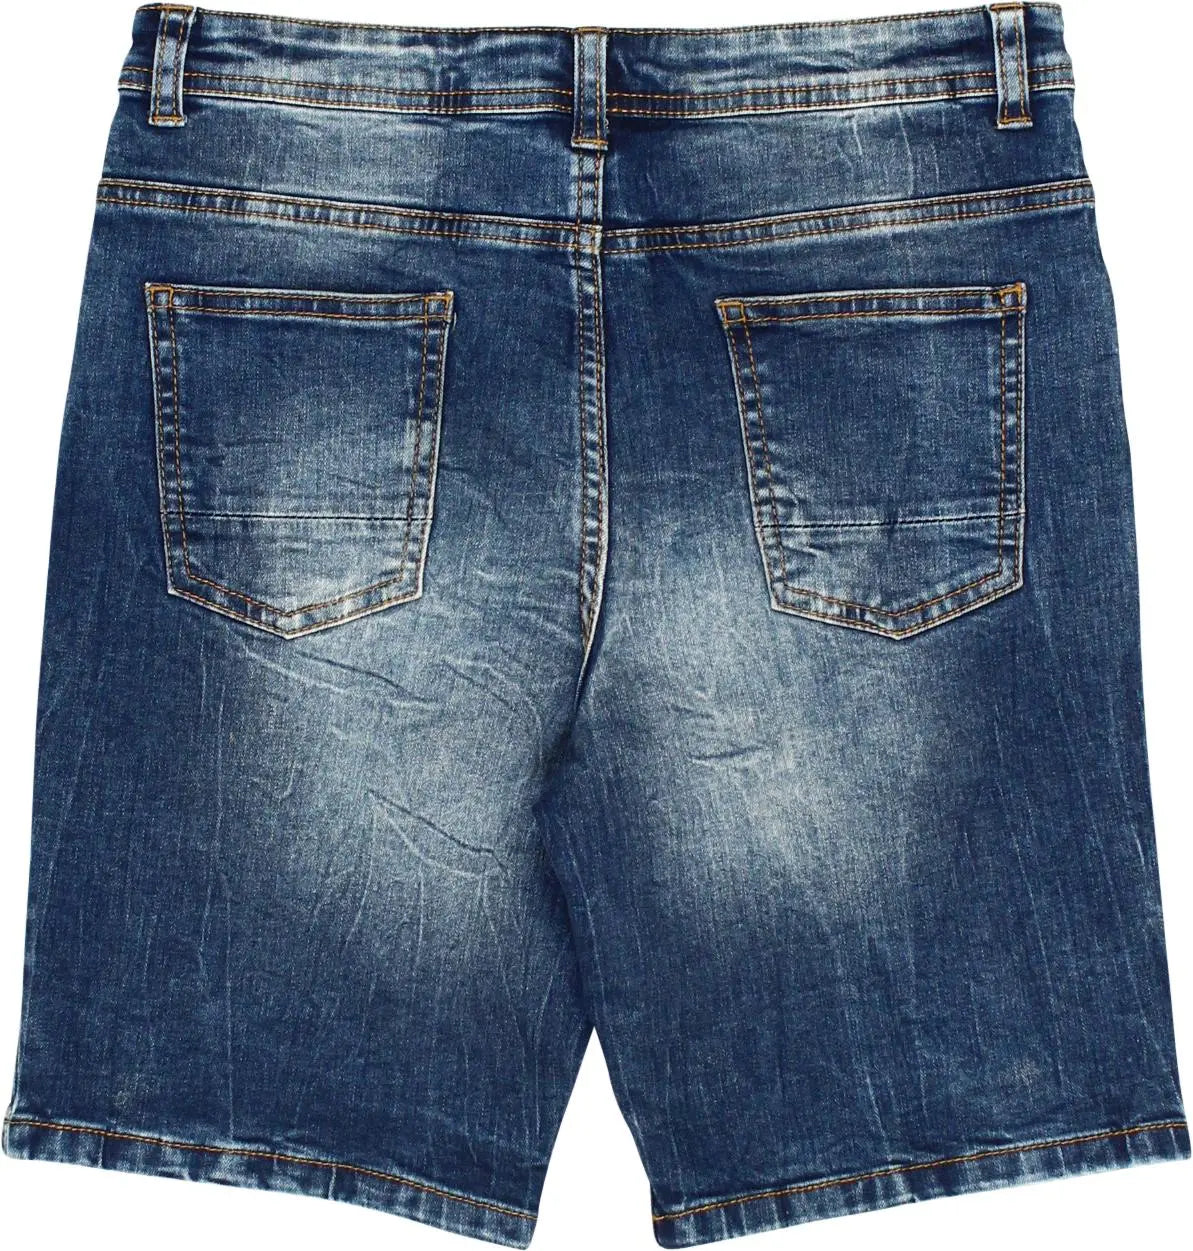 Denim Co - Distressed Denim Shorts- ThriftTale.com - Vintage and second handclothing